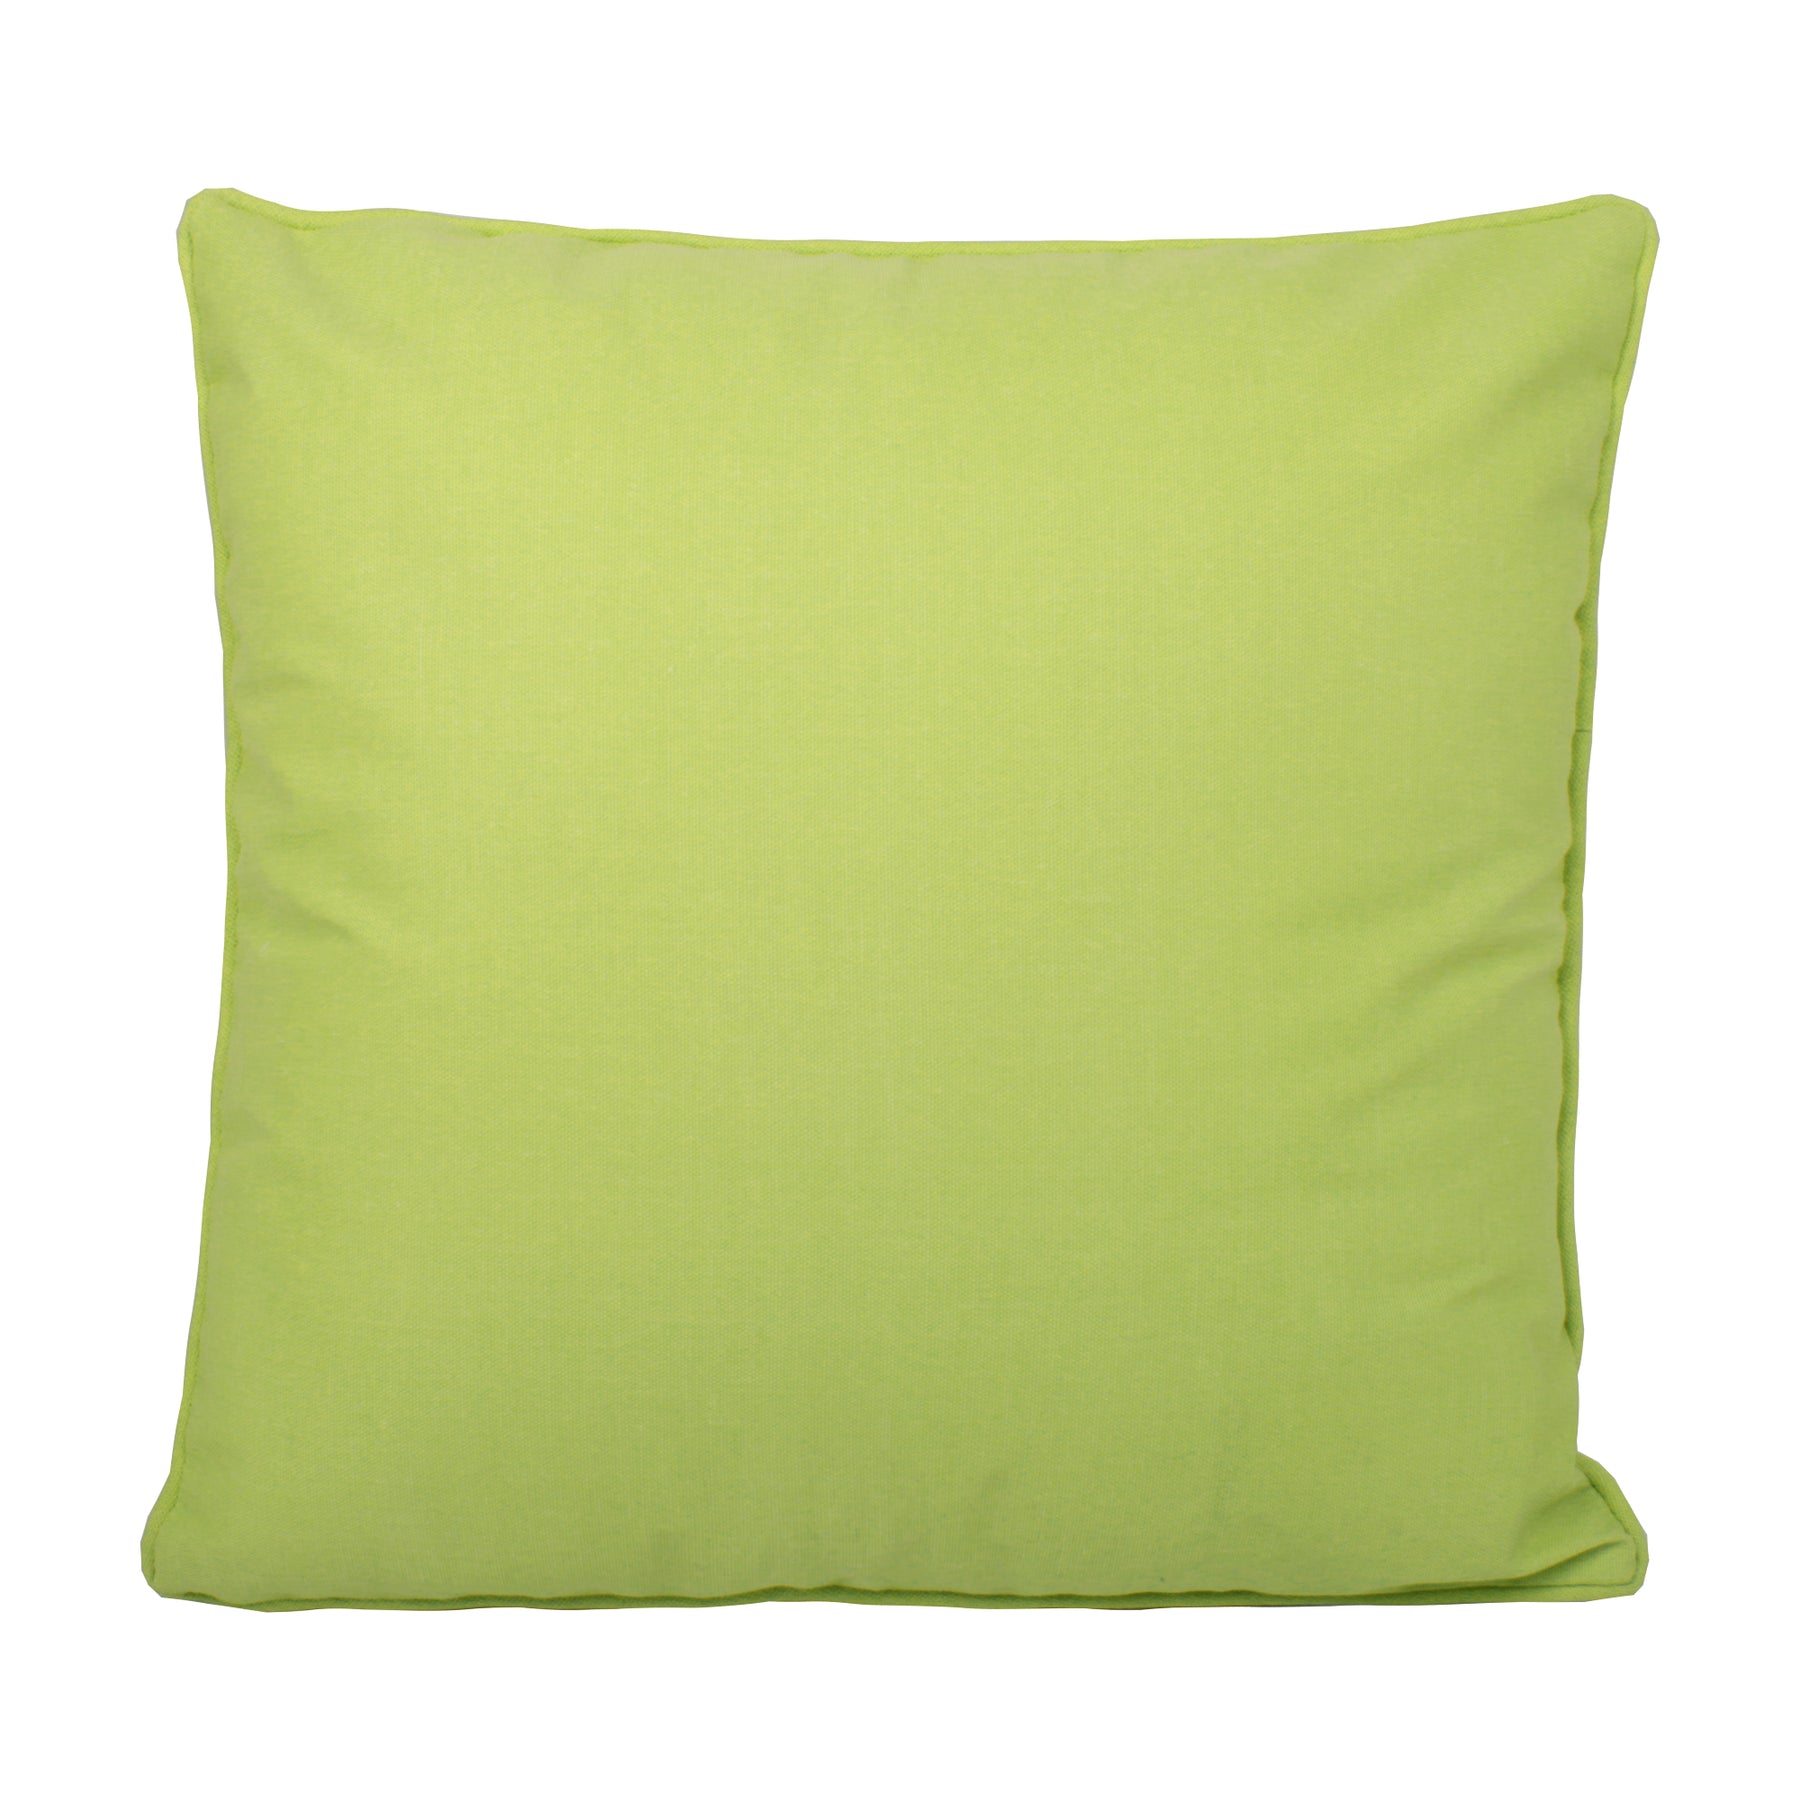 Plain Dye Outdoor Filled Cushion 43cm x 43cm Lime